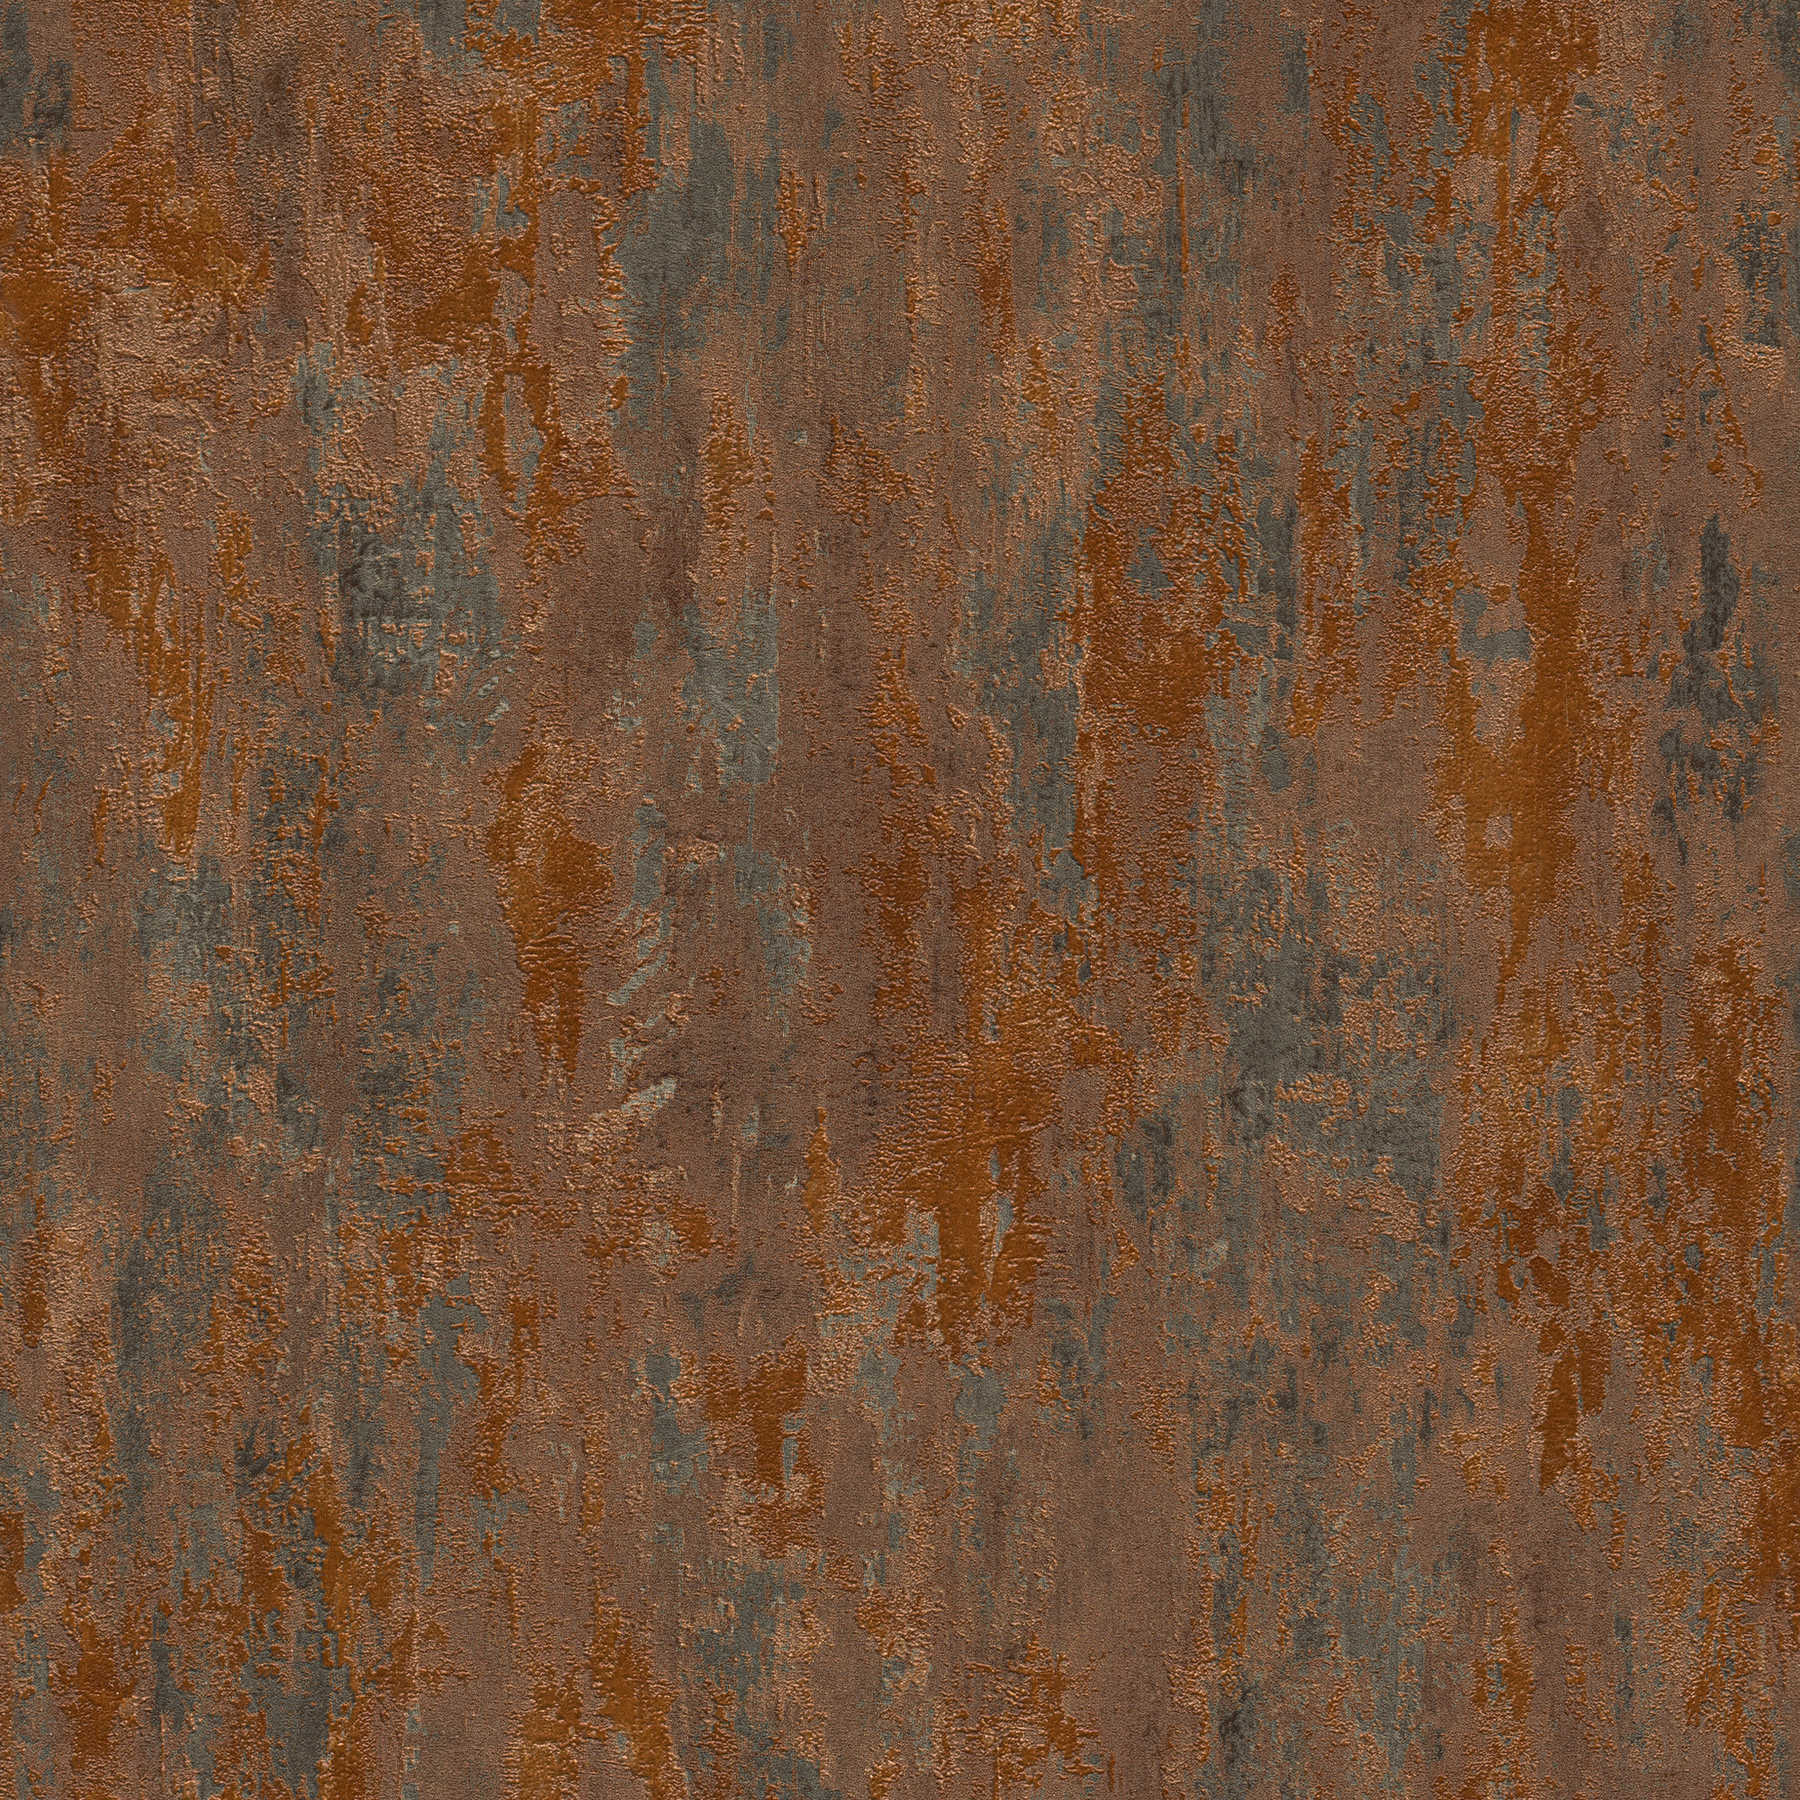             Copper wallpaper with metallic effect & rust look in industrial style
        